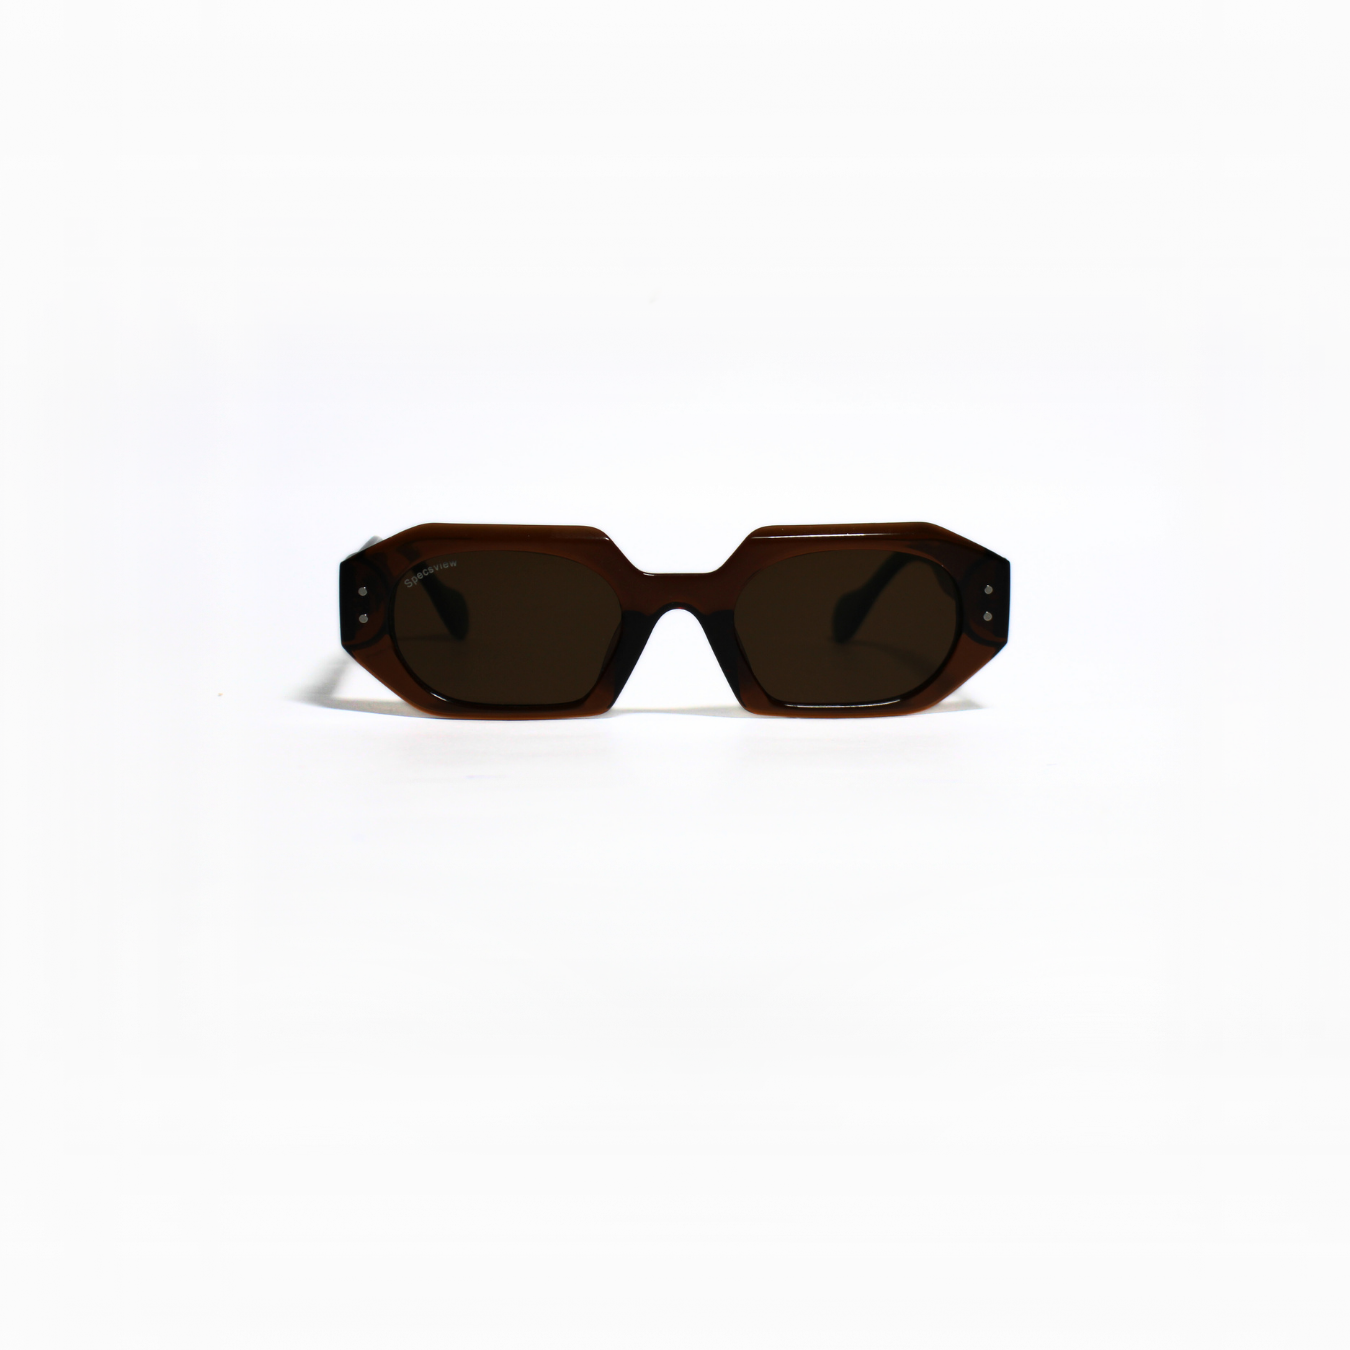 NOAH 003 I Sunglasses for Men and Women - Specsview